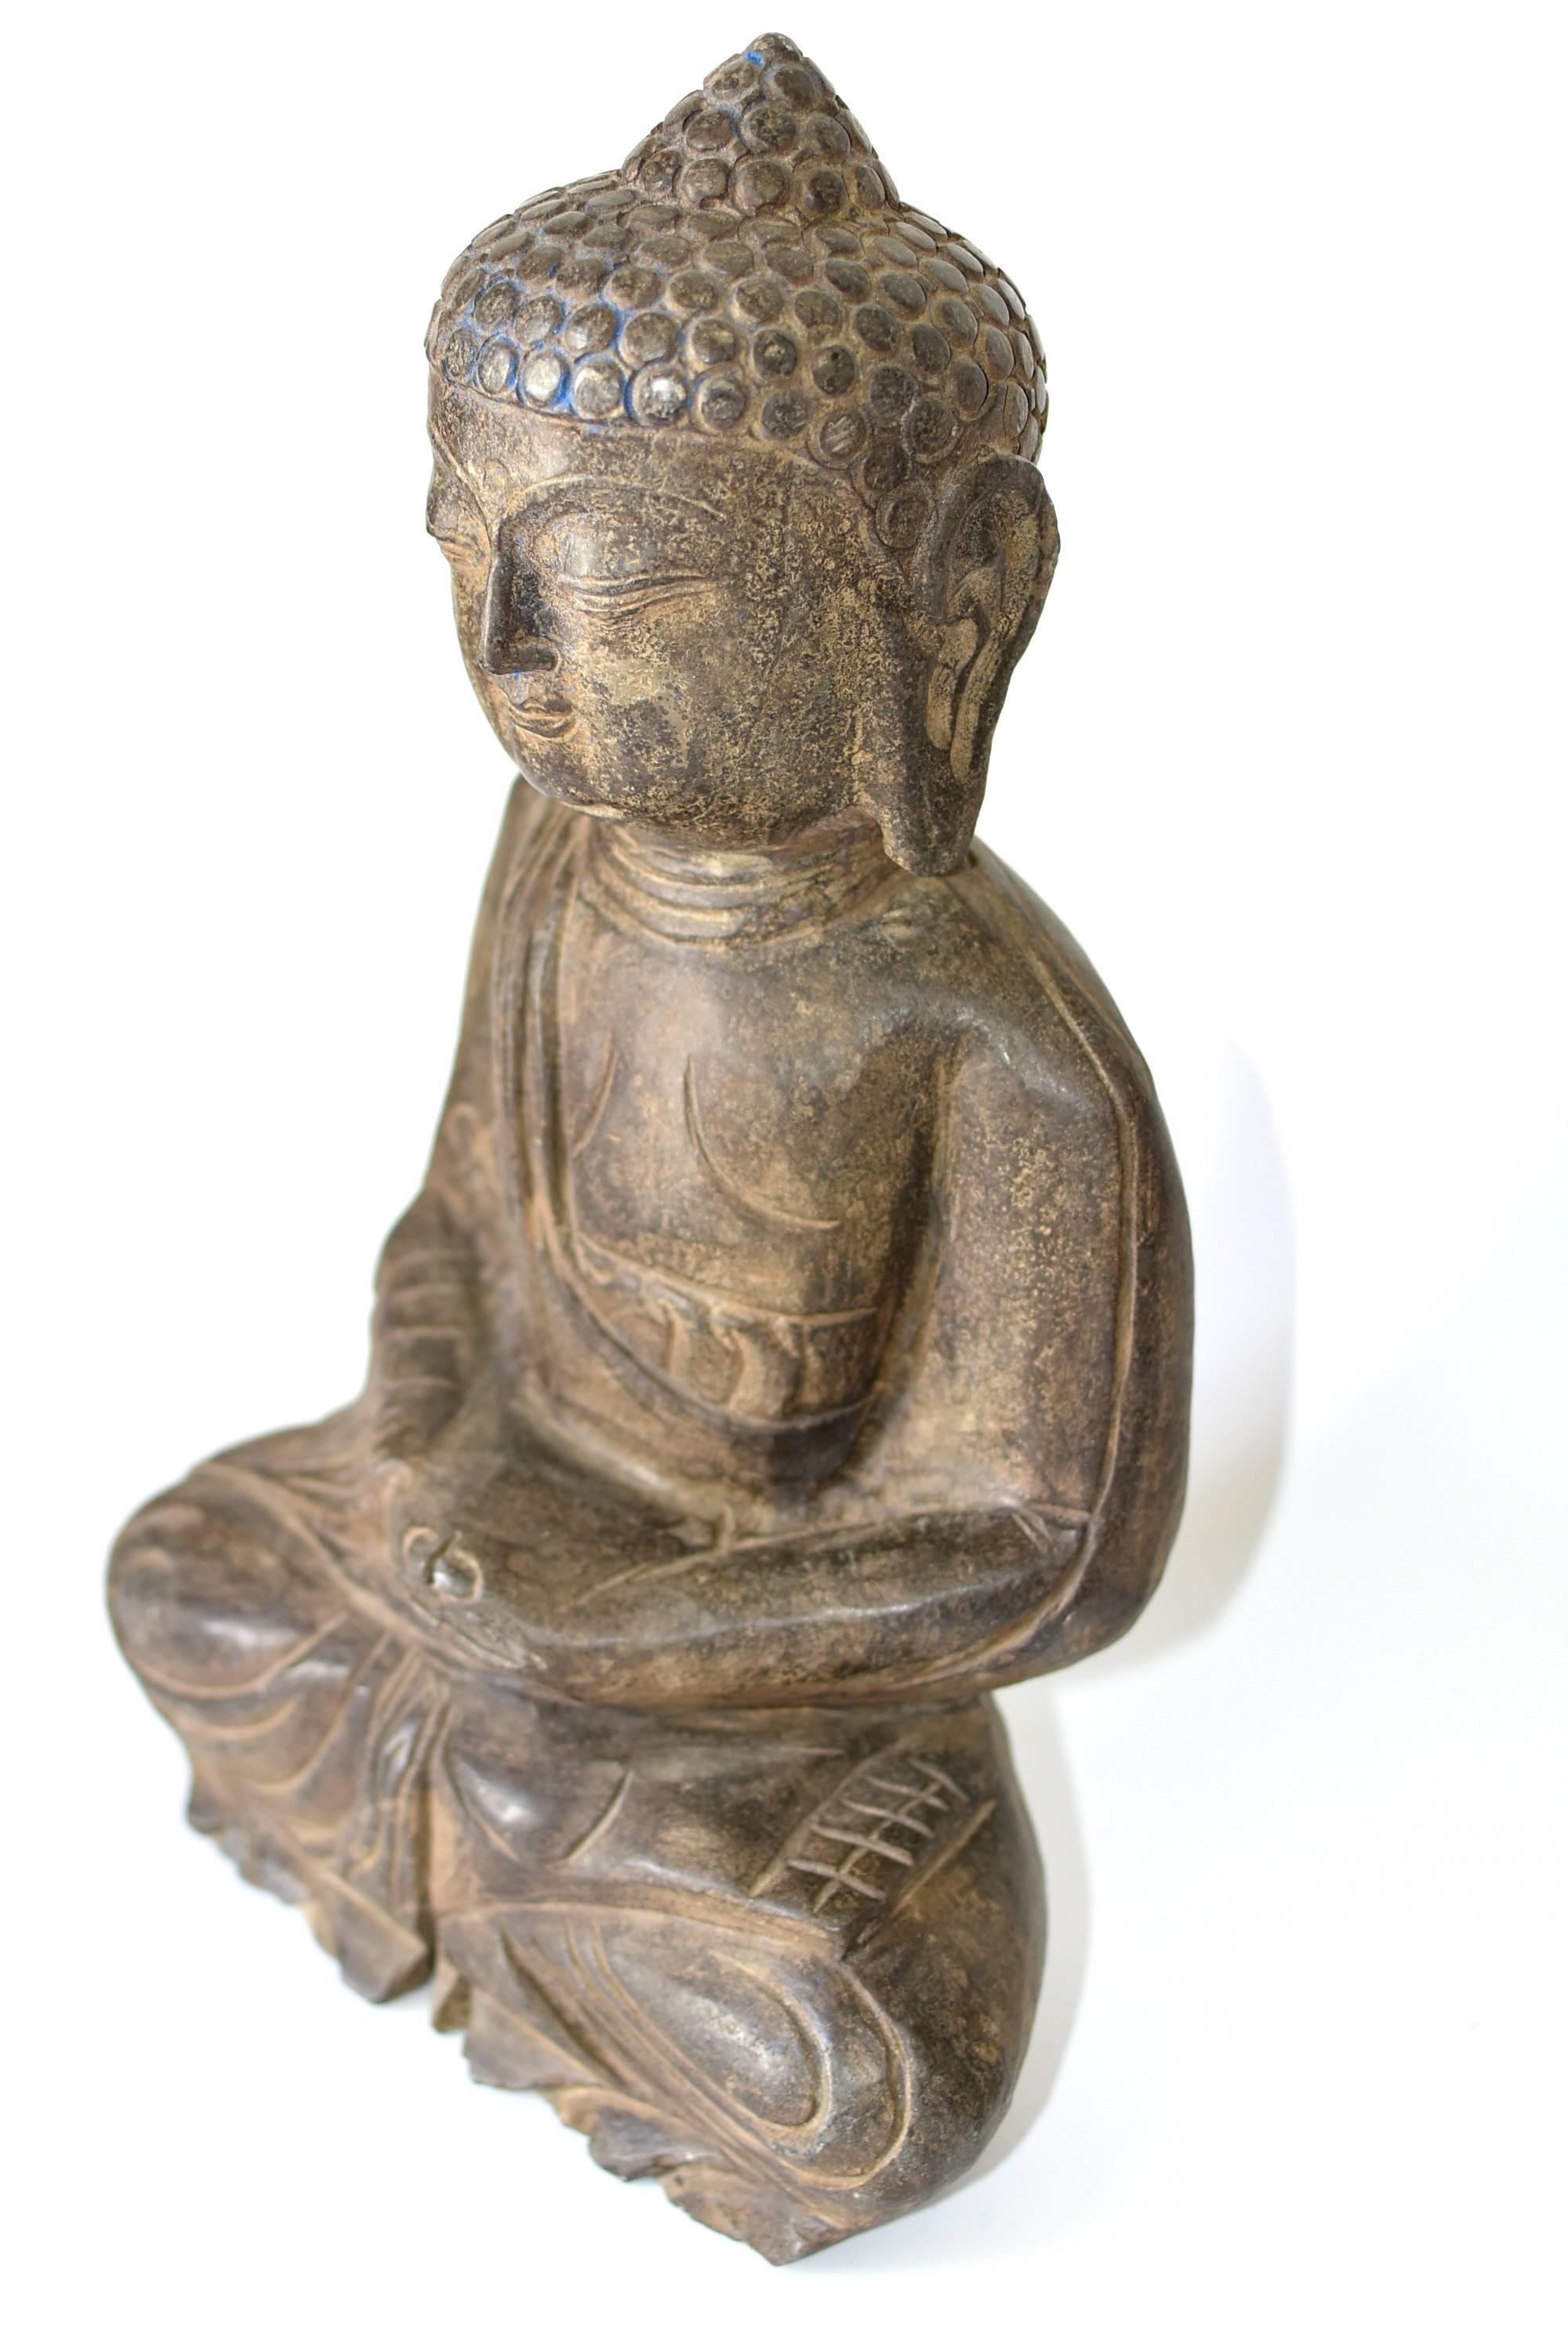 Hand-Carved Large Basalt Stone Buddha Statue